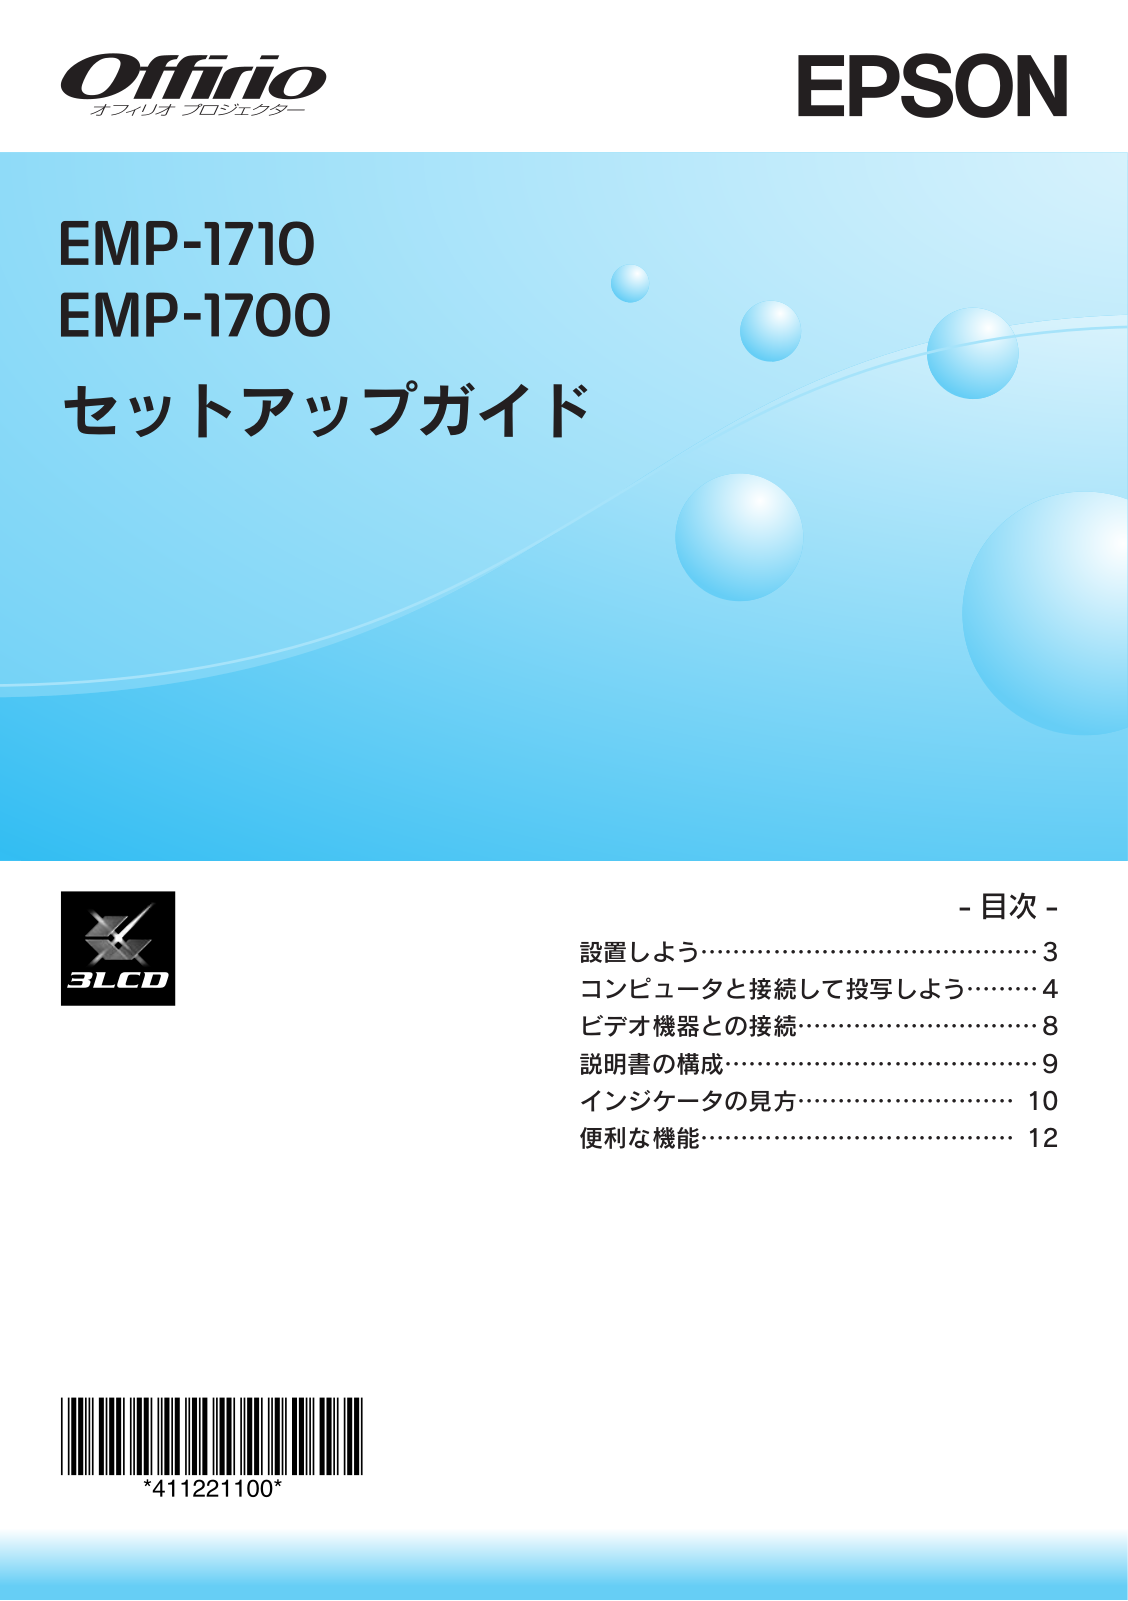 Epson EMP-1700, EMP-1710 Quick start guide